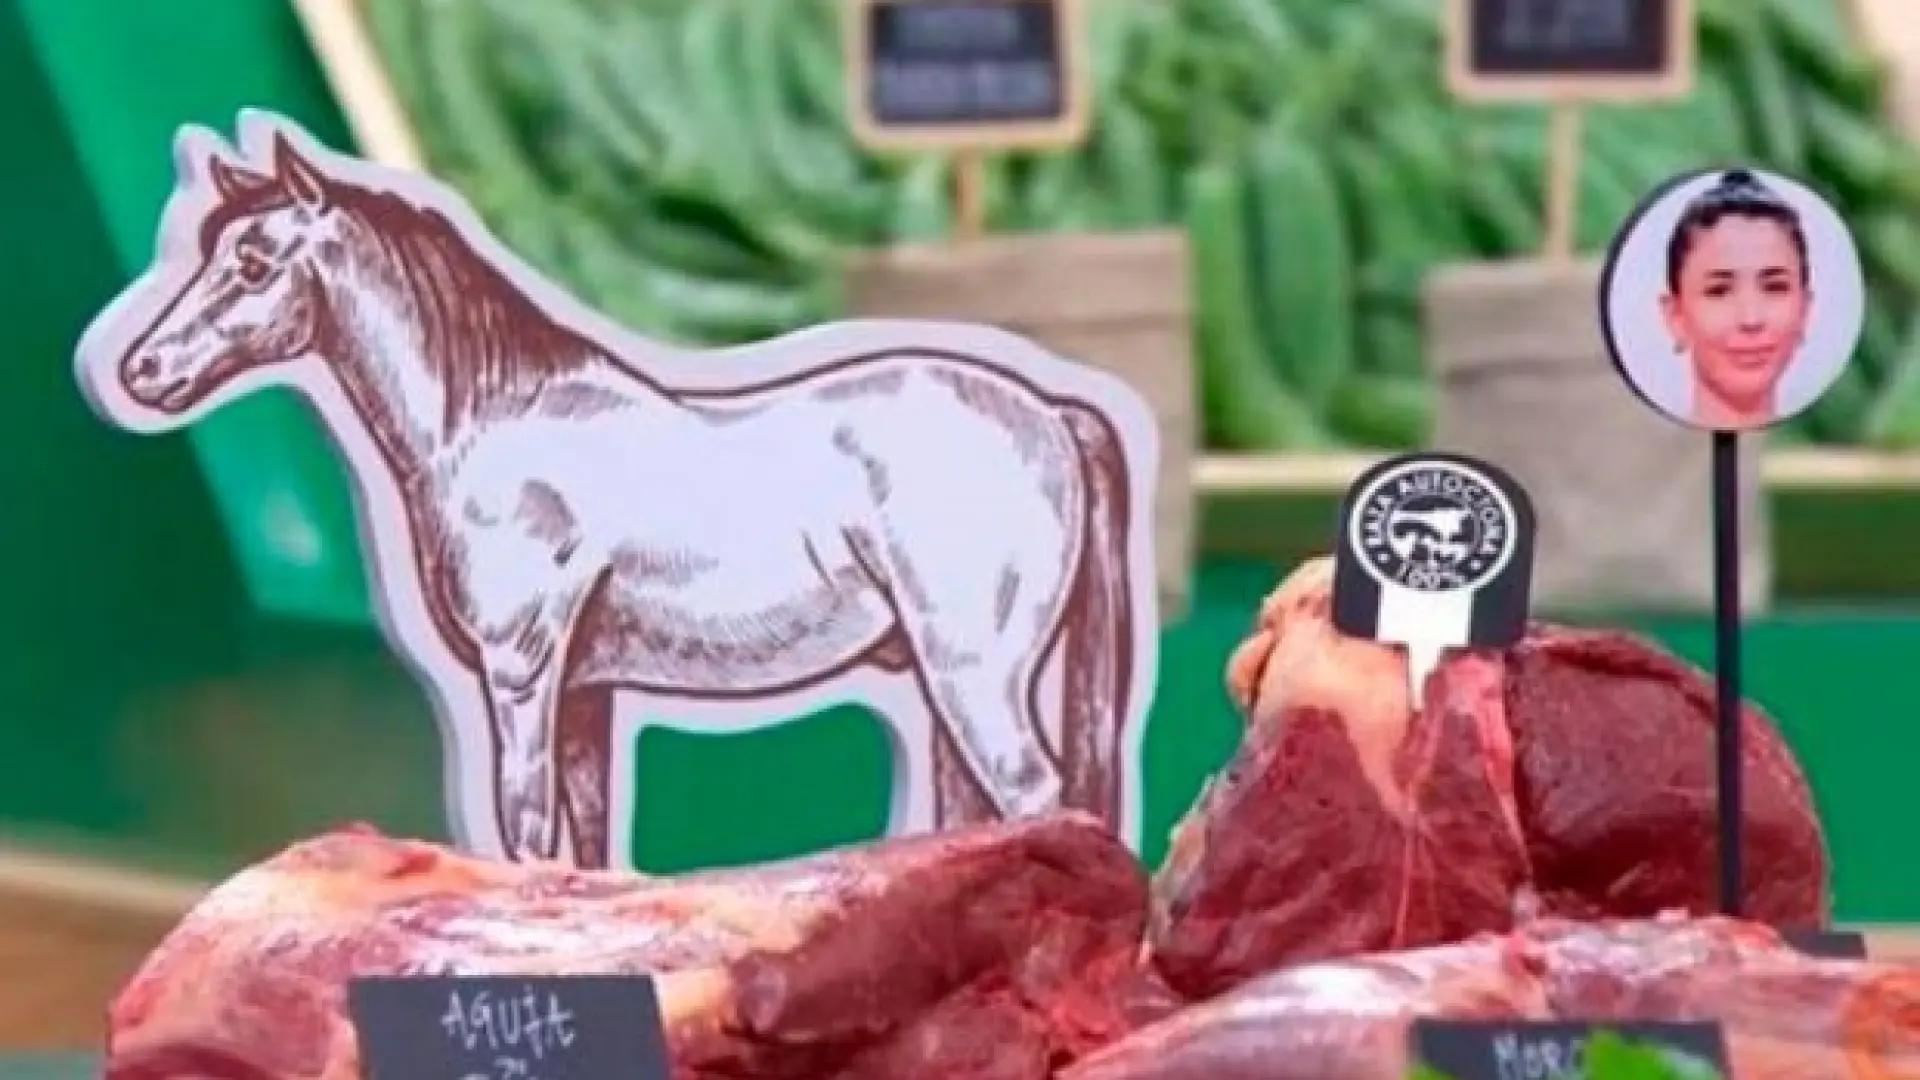 carne de caballo italia - Cómo se llama la carne de caballo en Italia